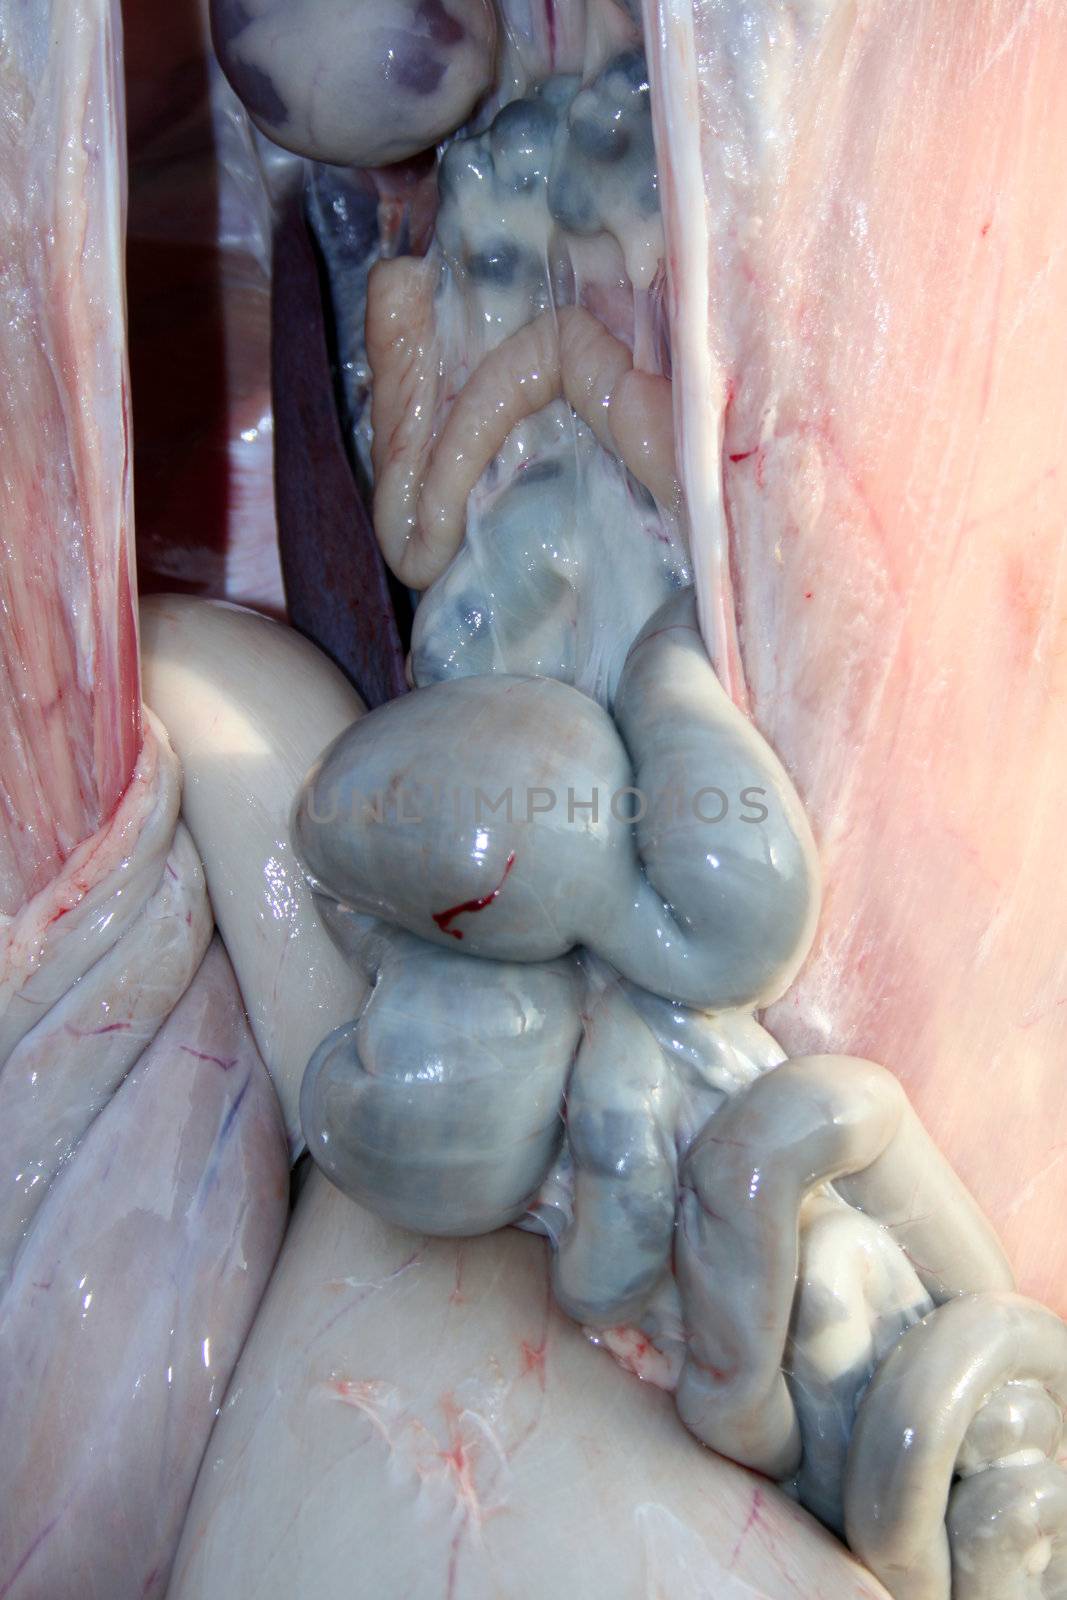 Close up of lamb's intestine